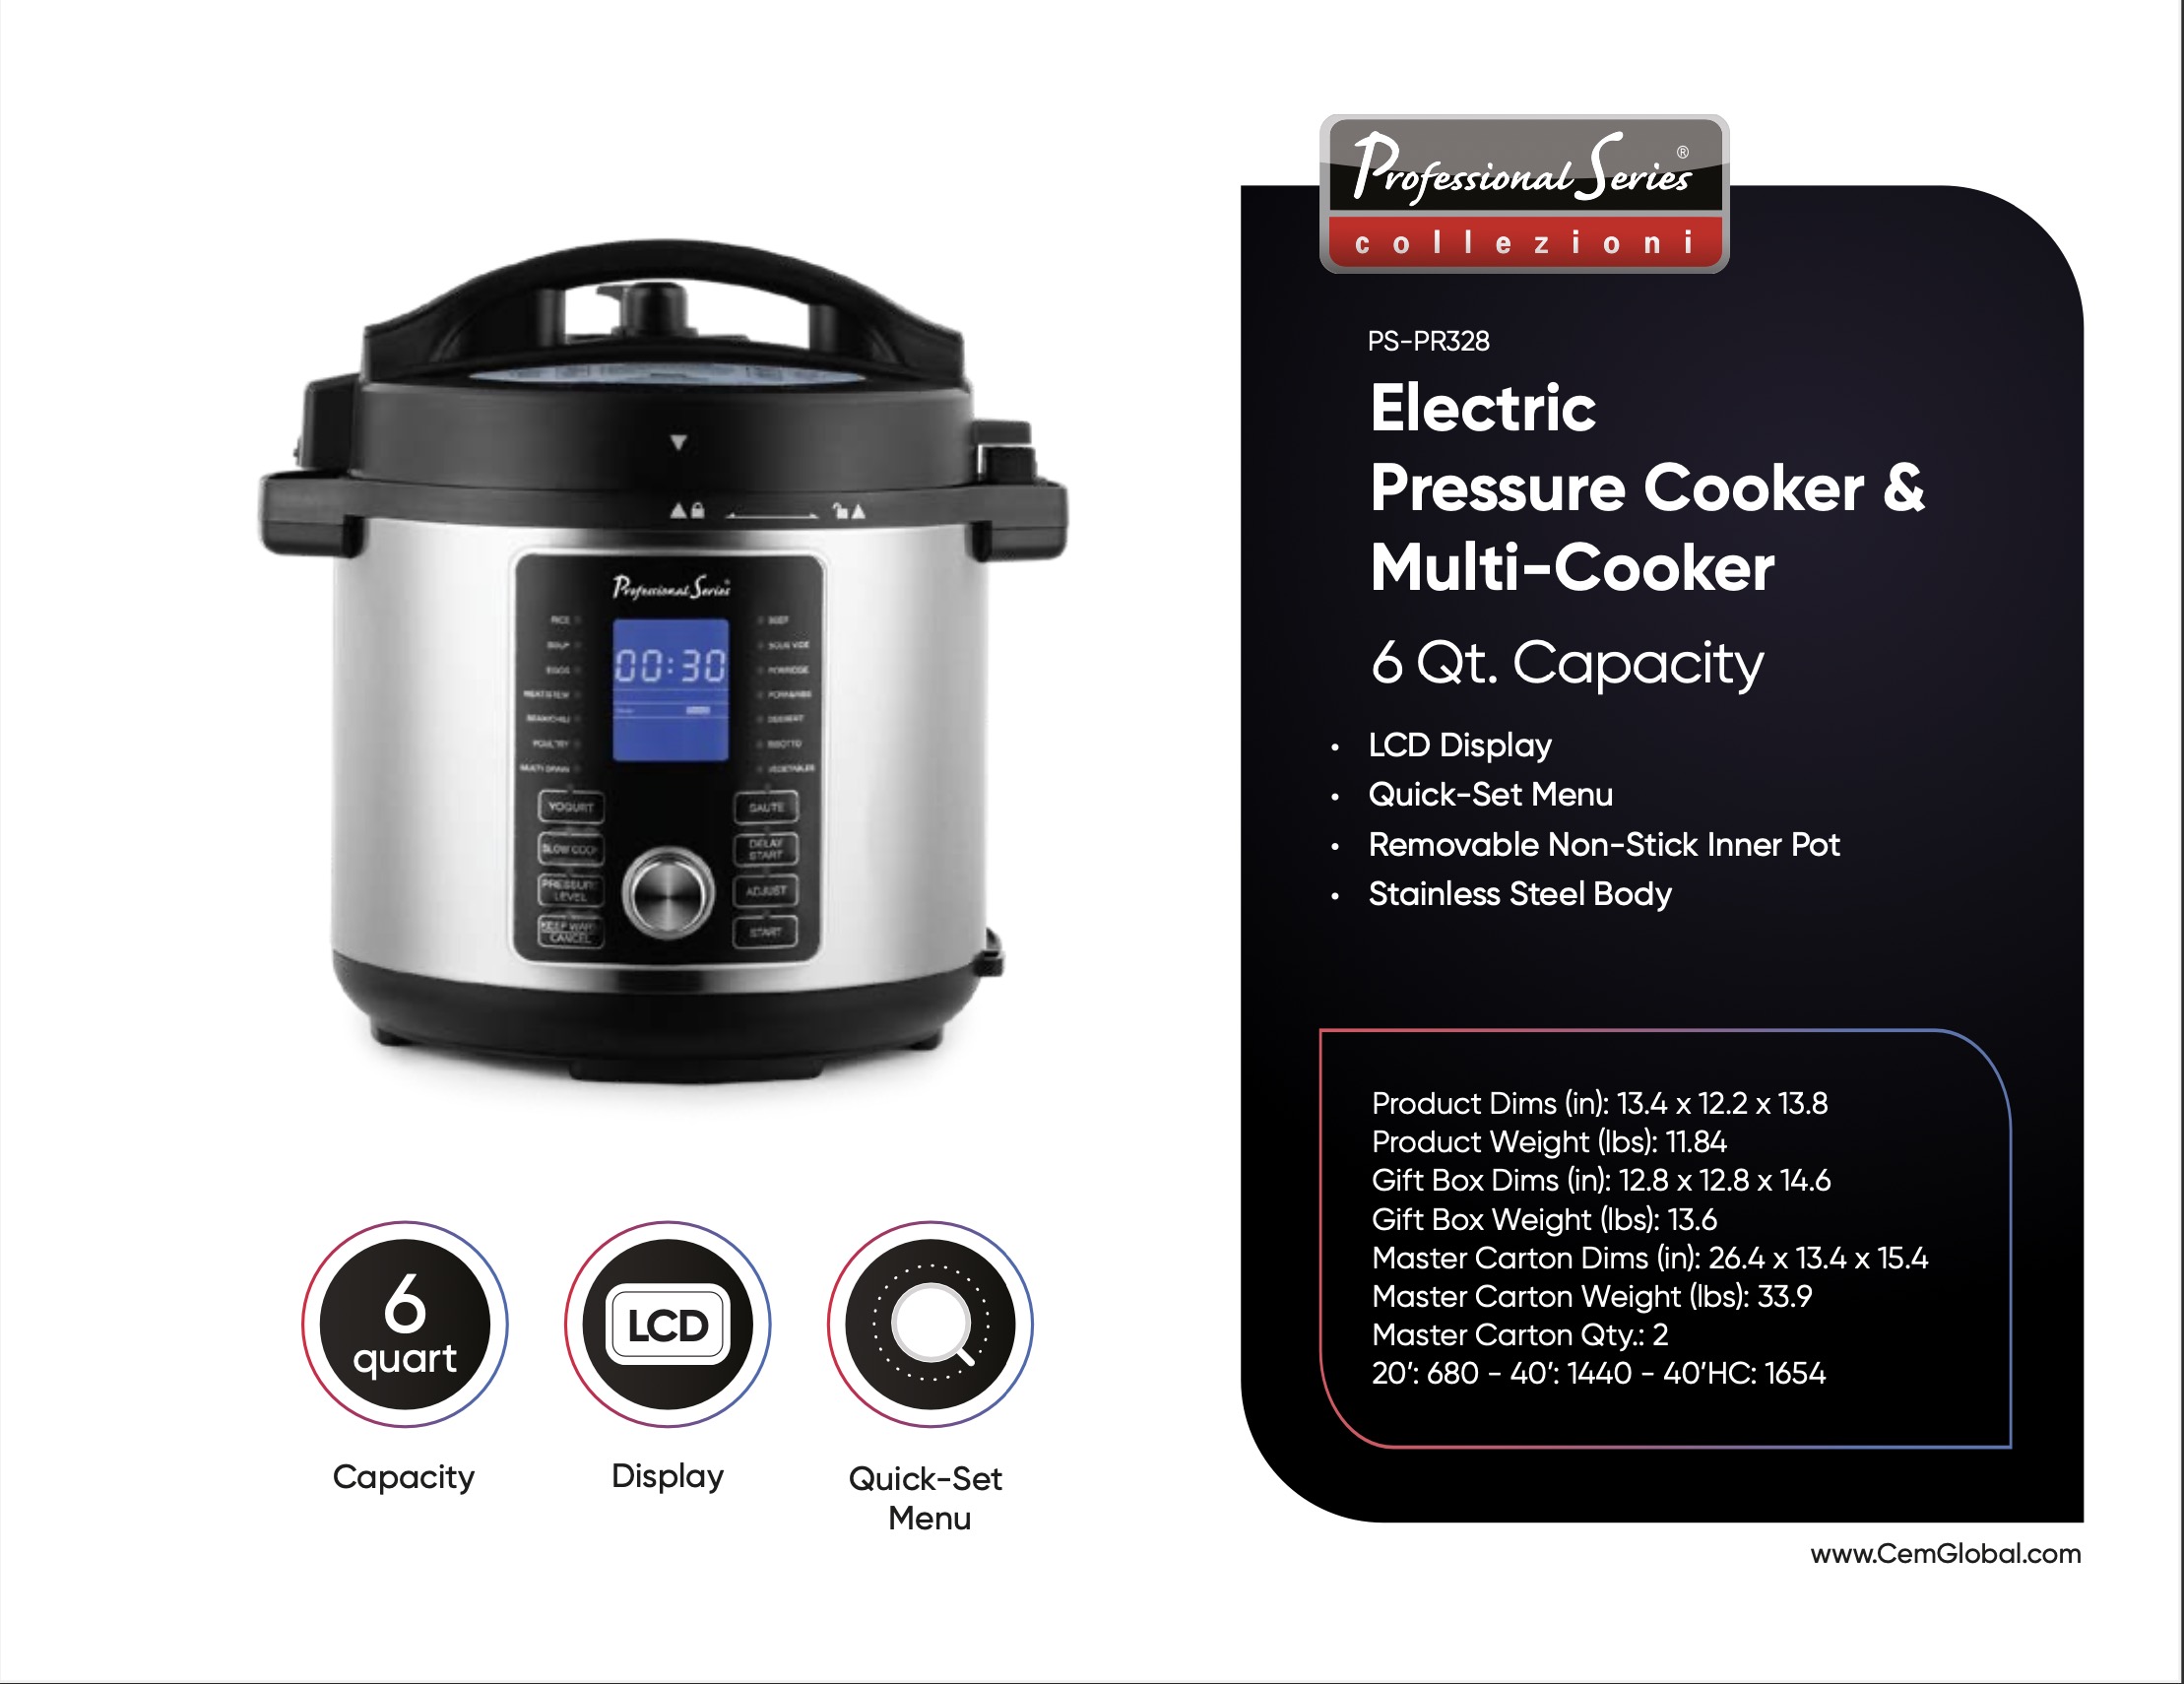 Electric Pressure Cooker & Multi-Cooker